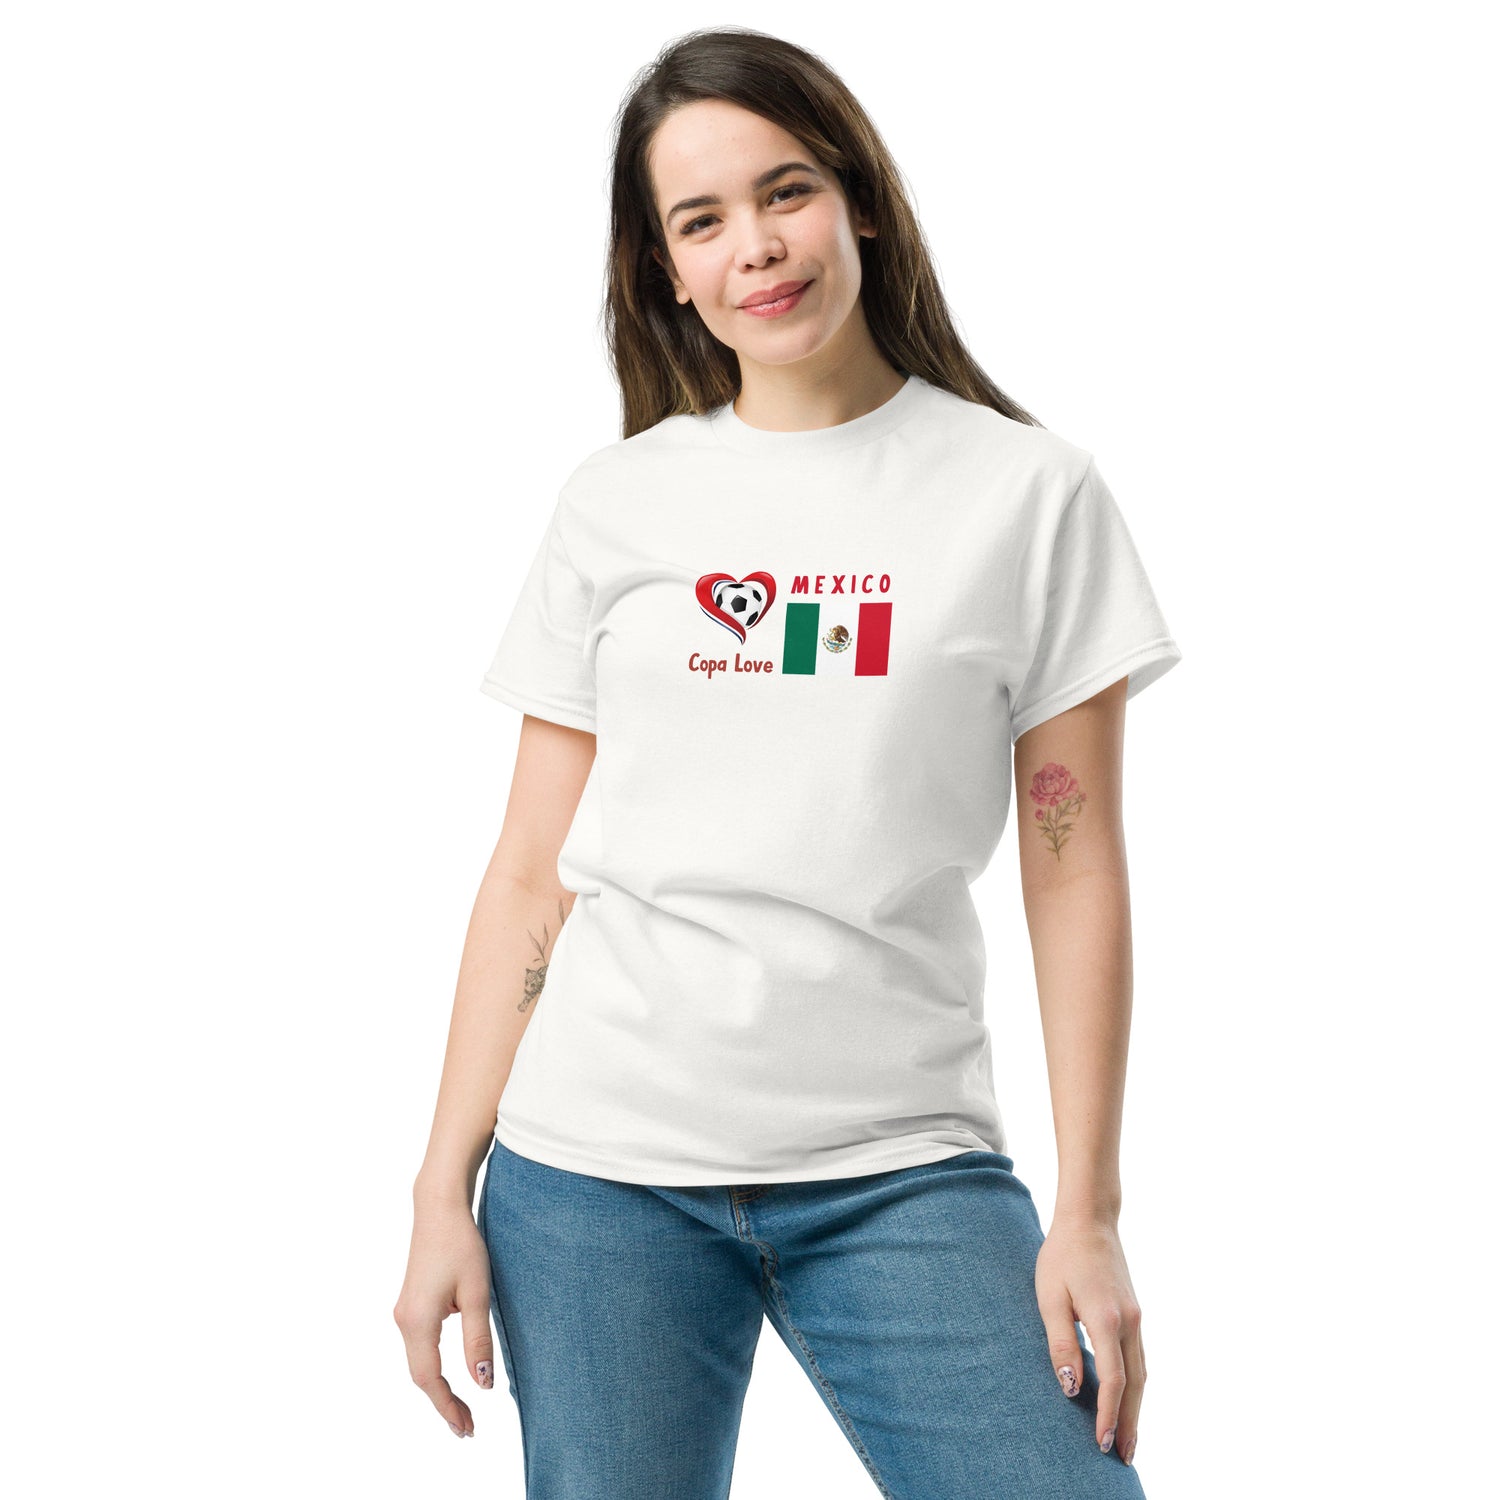 MEXICO - Copa Love classic tee shirt